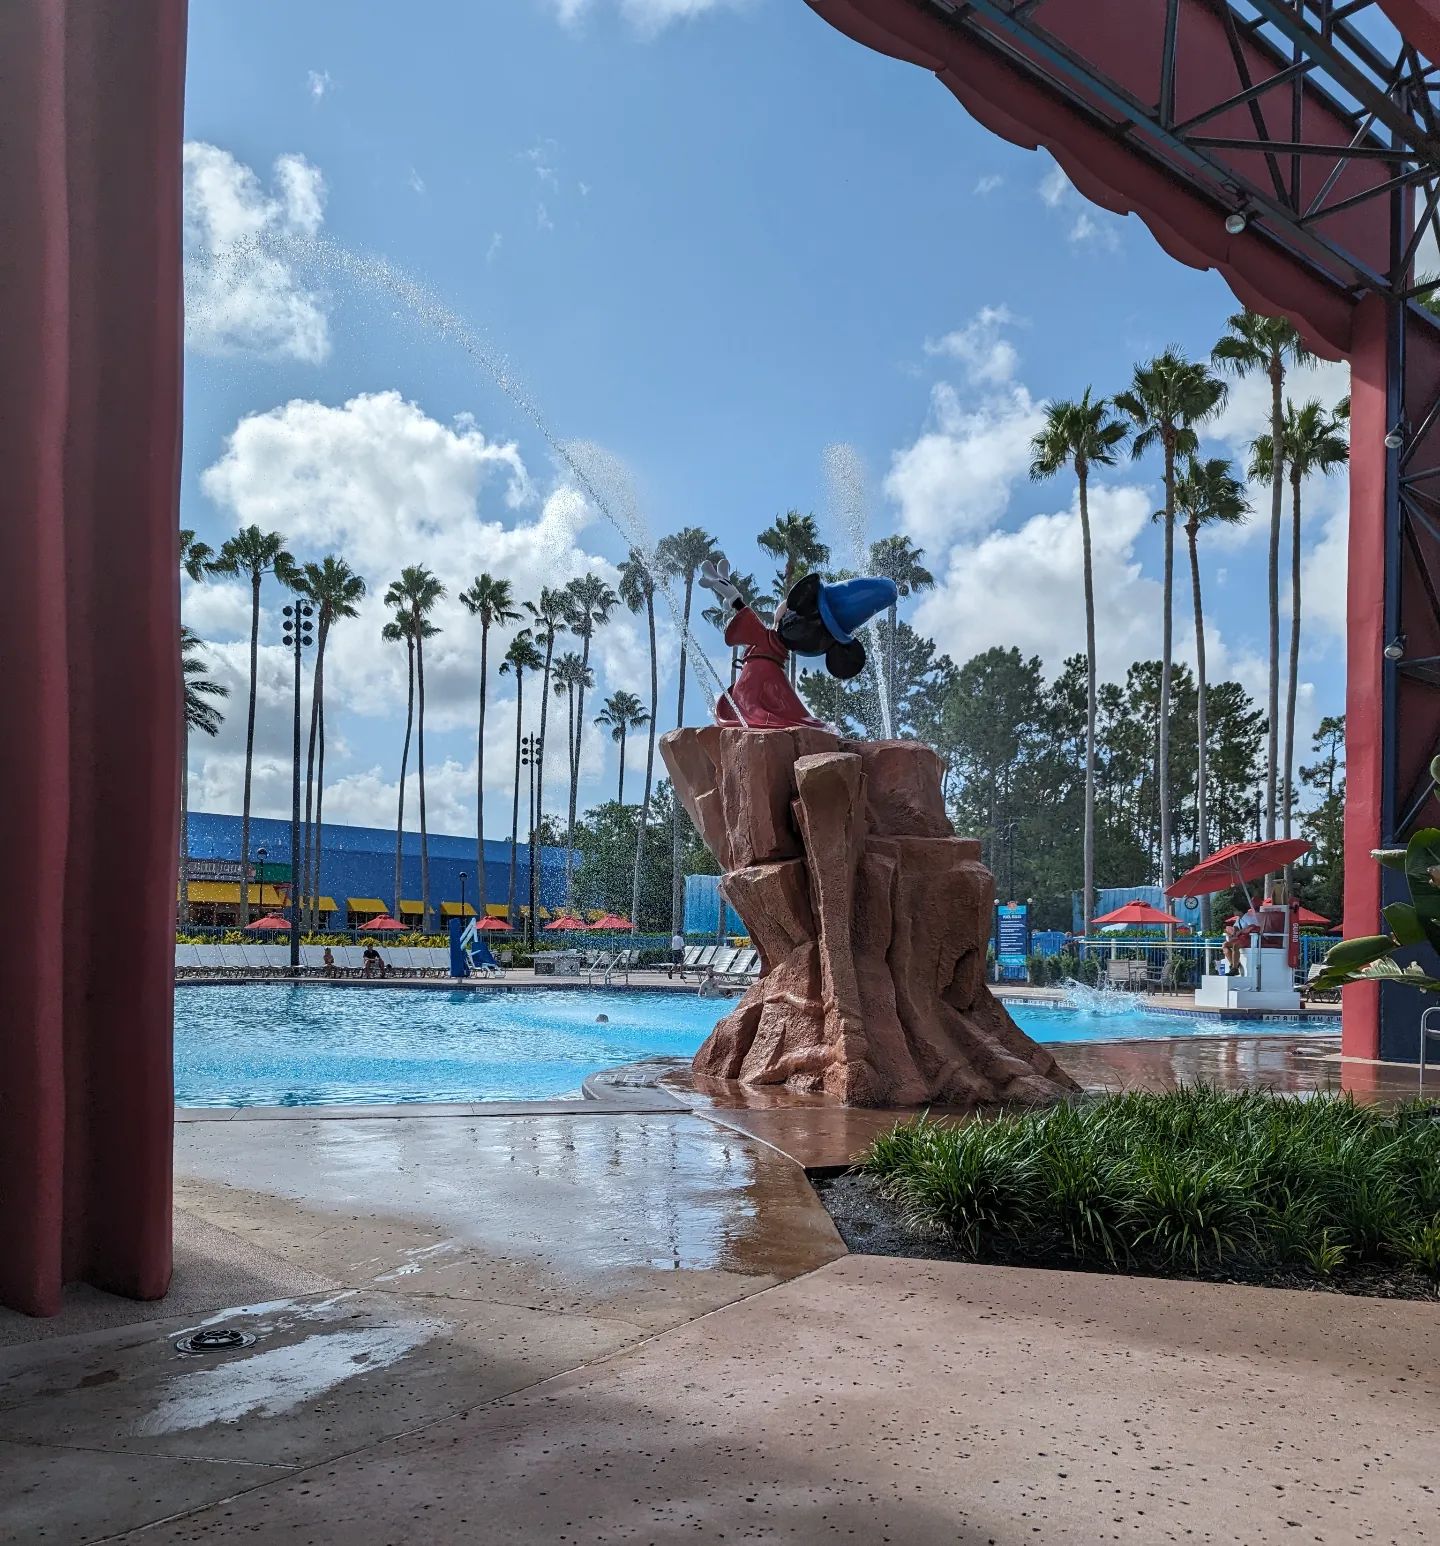 Fantasia Pool - Disney's All Star Movies Resort